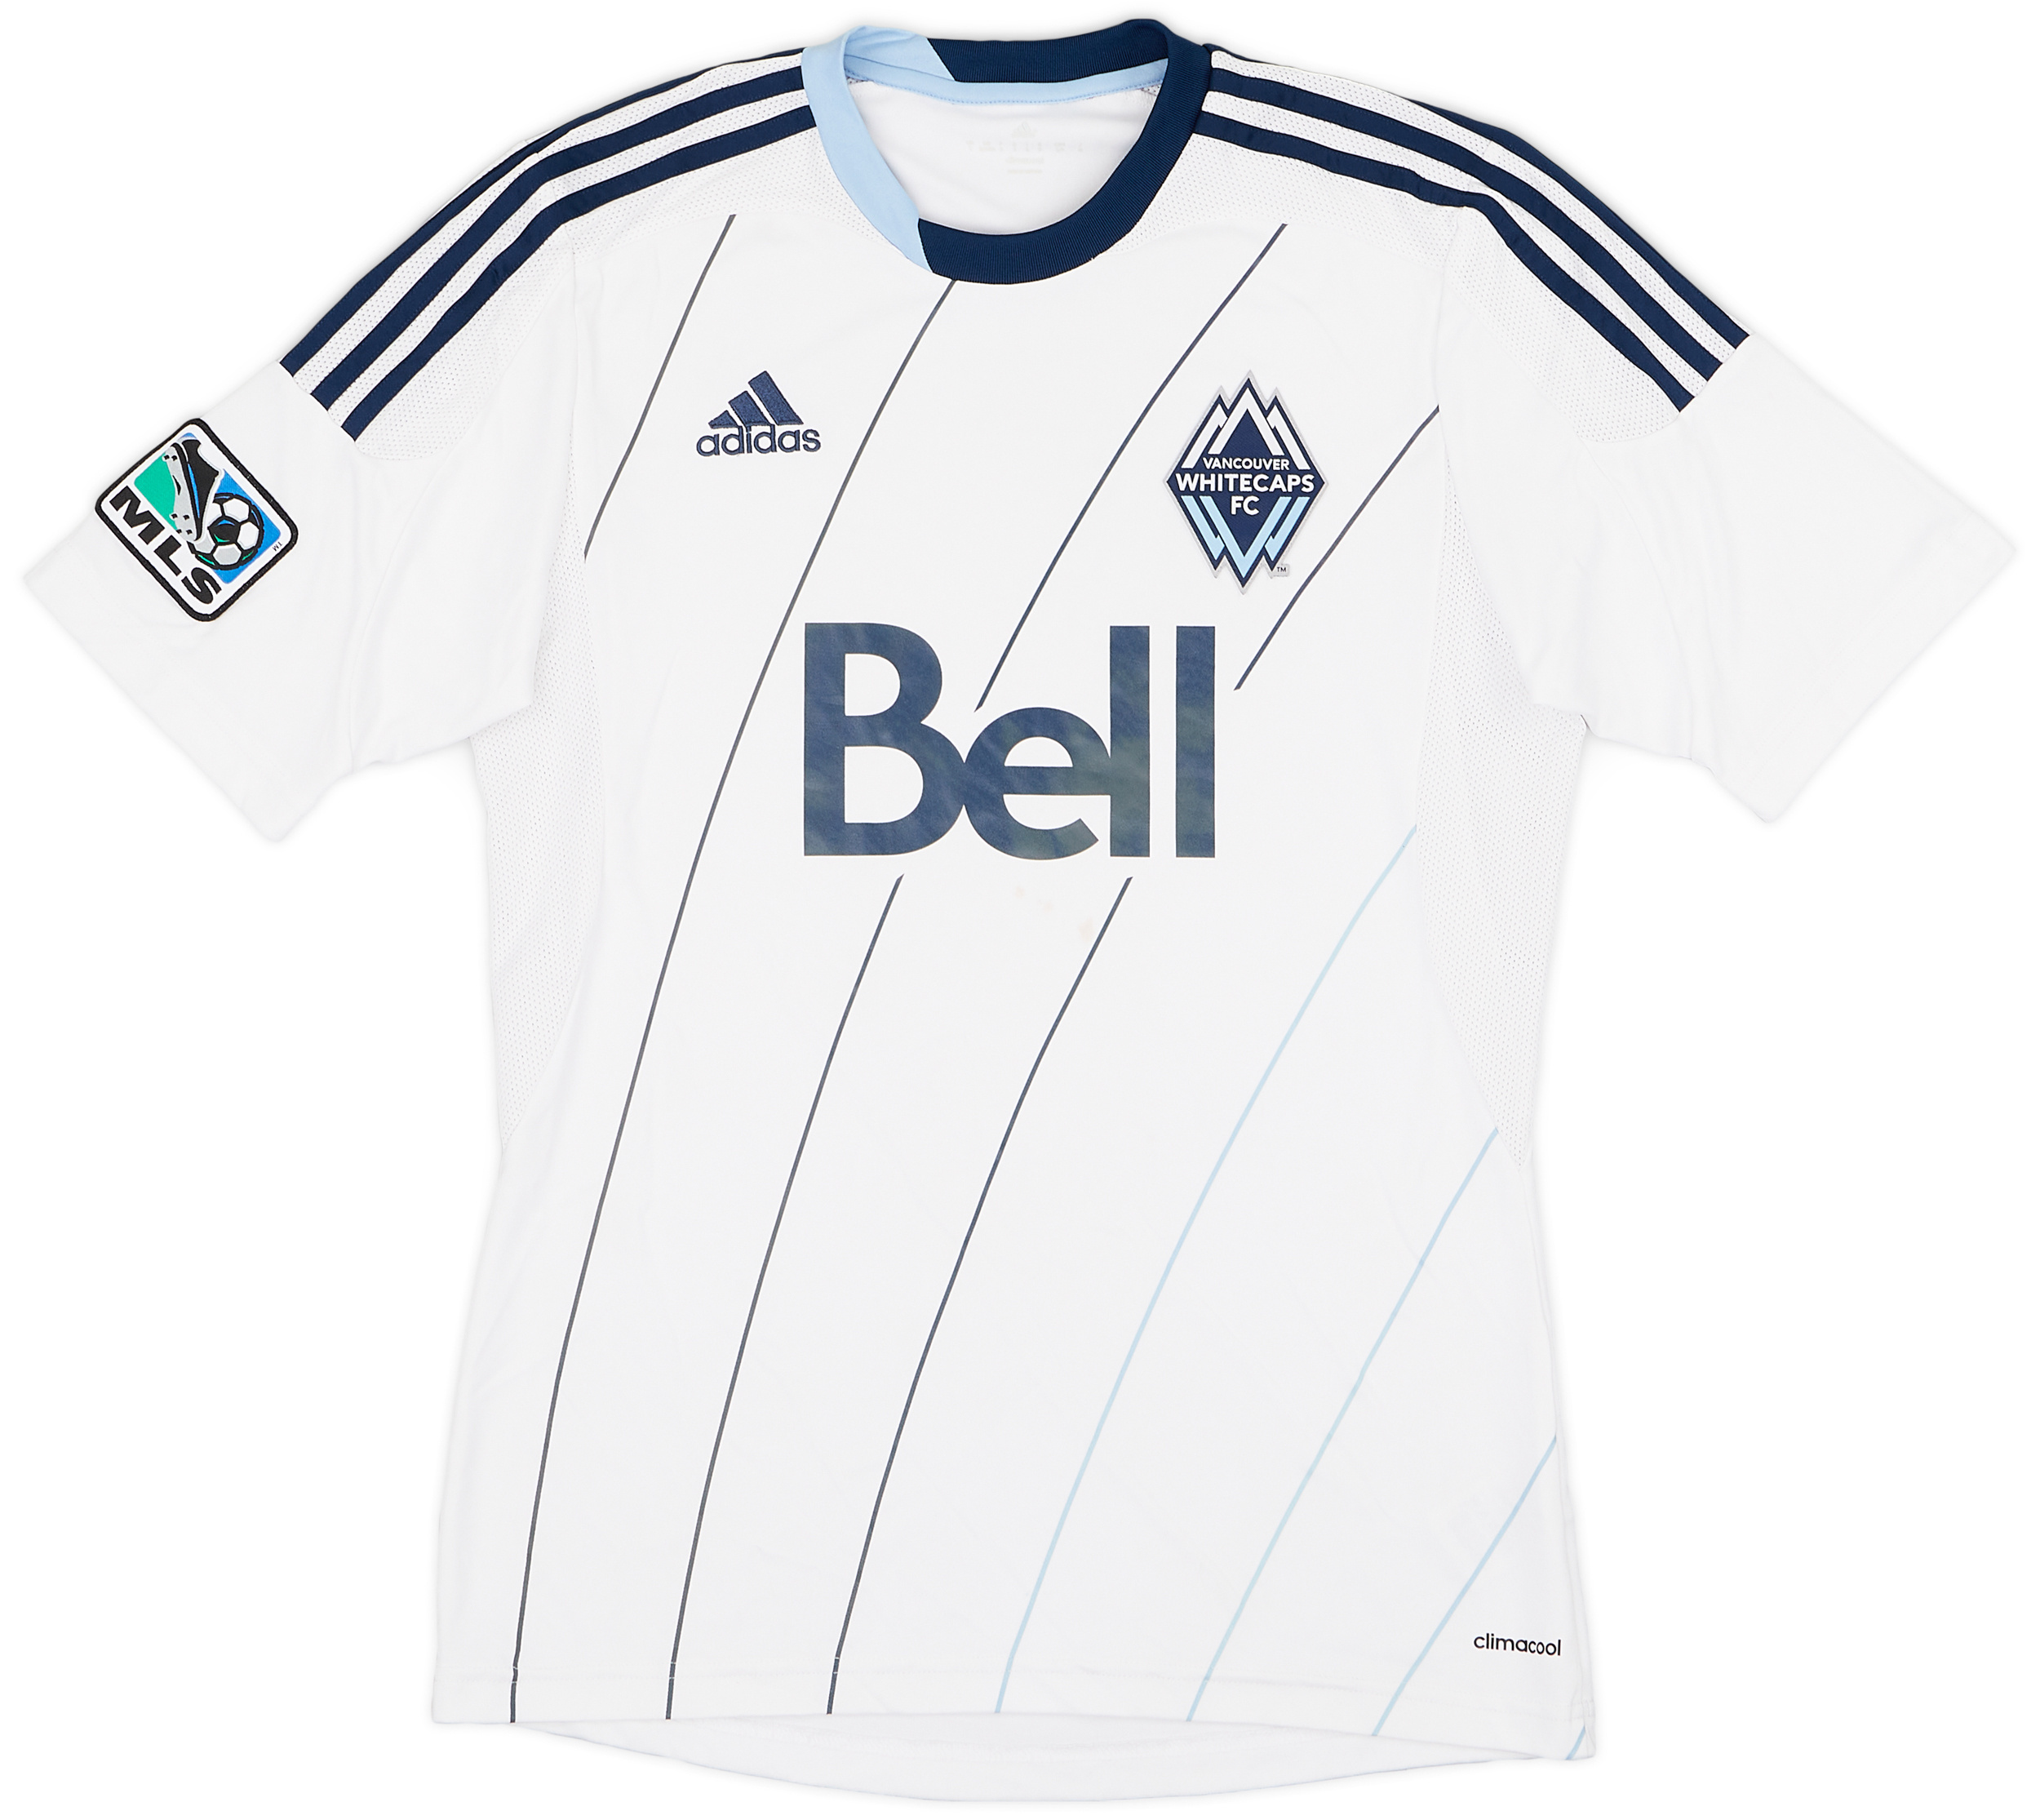 2013 Vancouver Whitecaps Home Shirt - 6/10 - ()